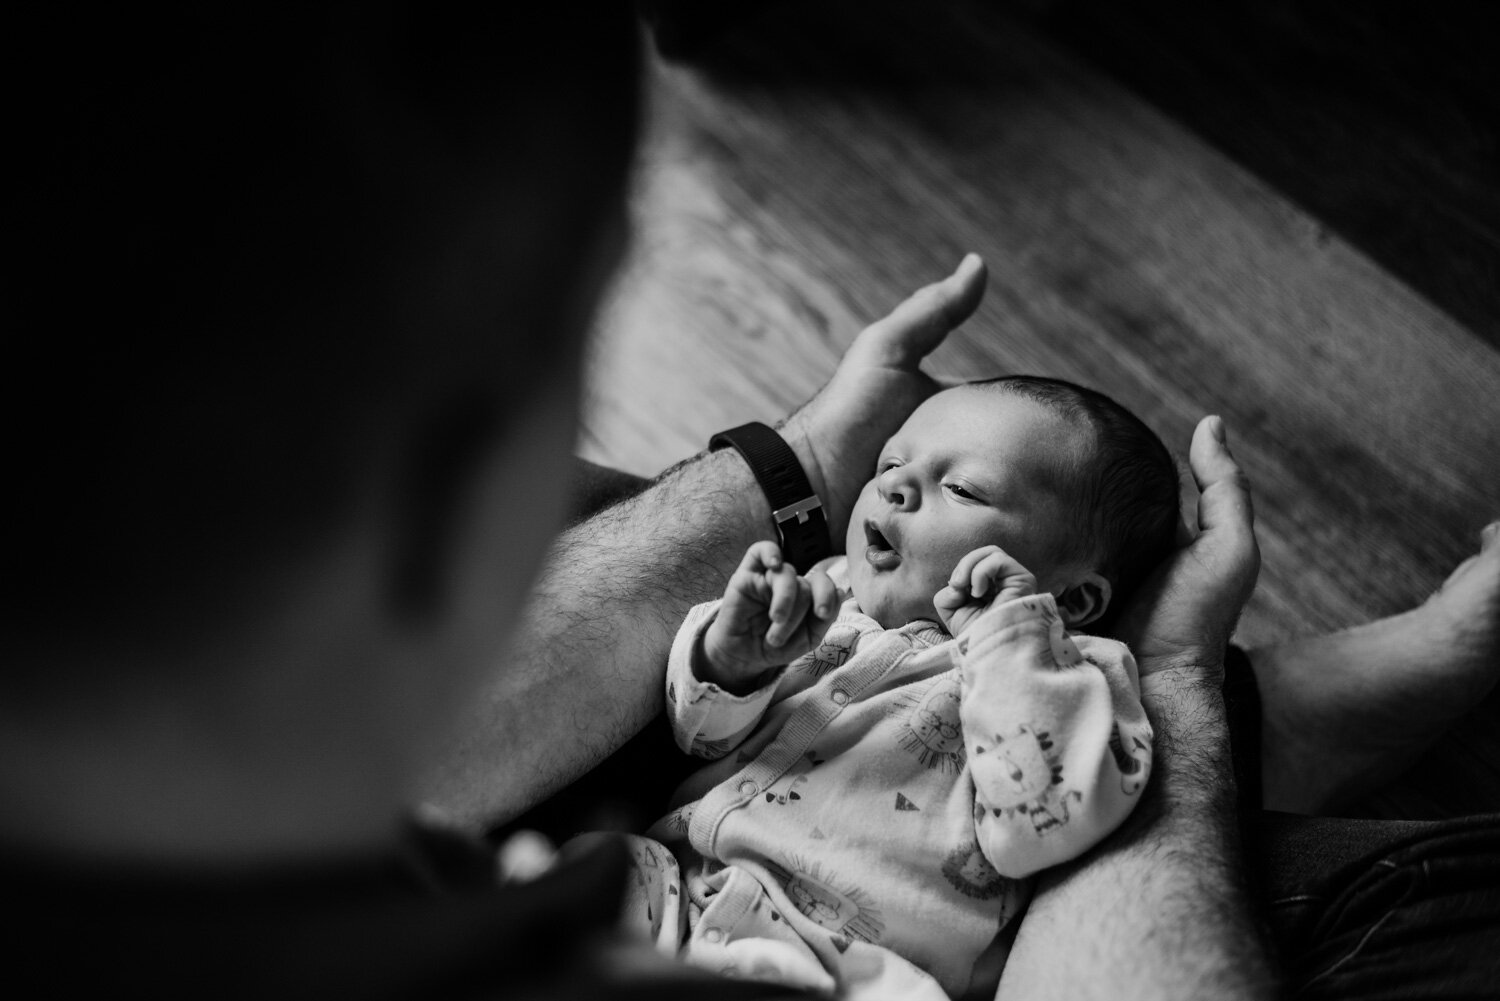 Dad cradles his newborn son's head in his hands